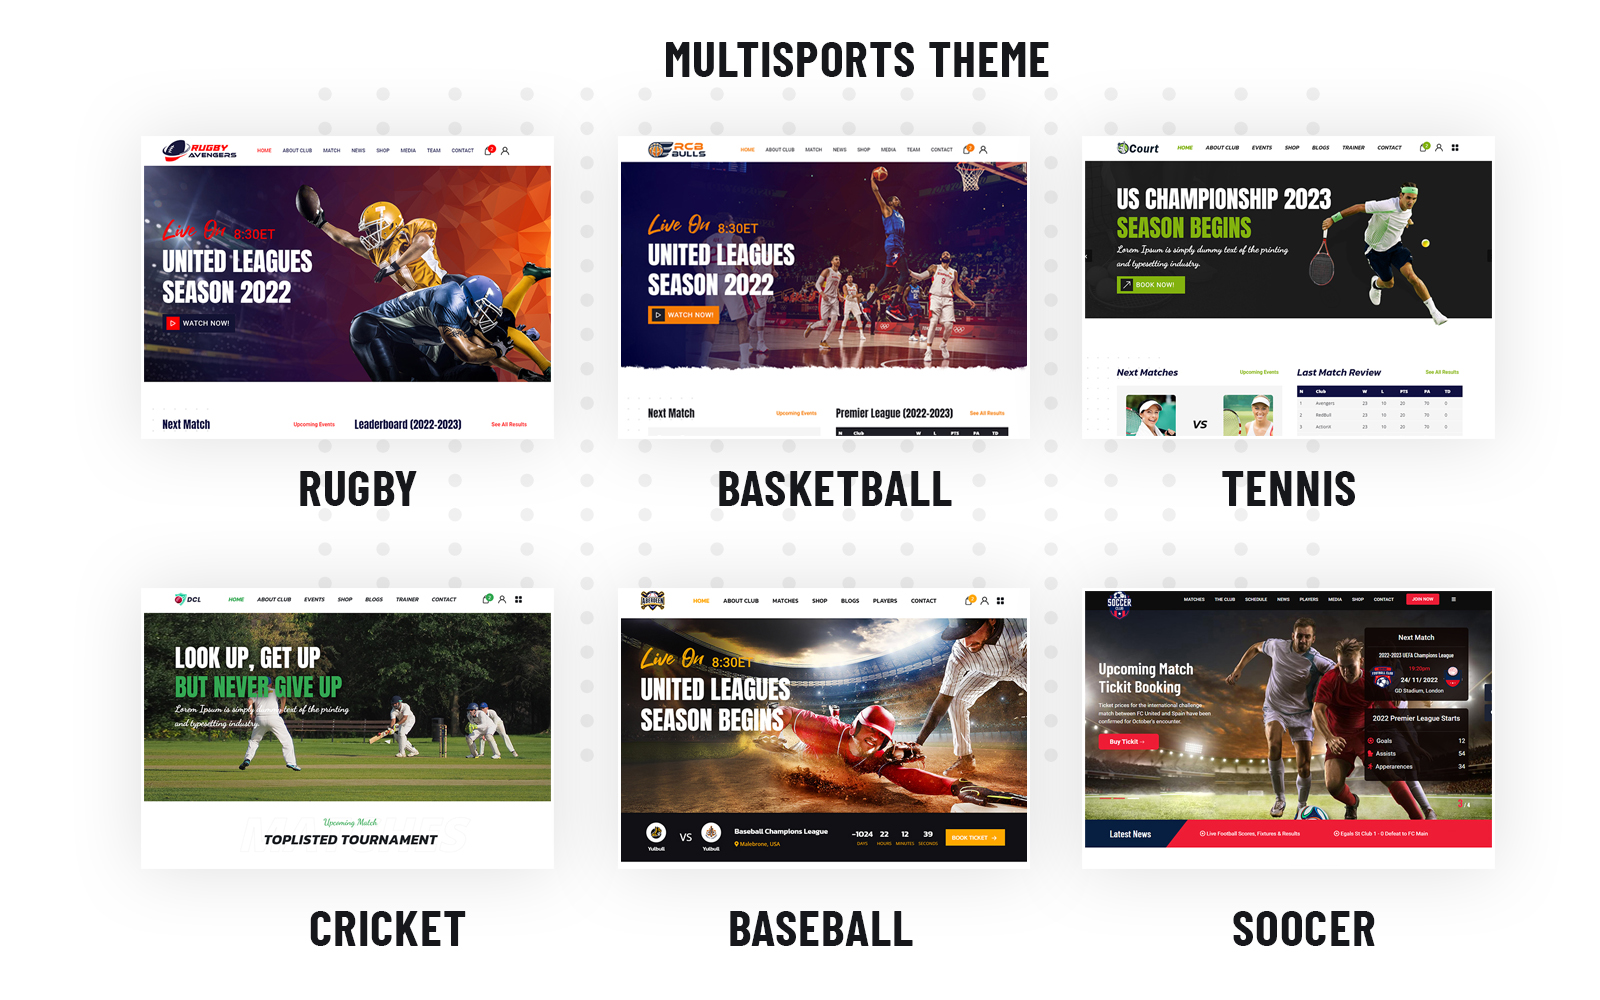 Gambol - Multi Sports HTML5 Website Template